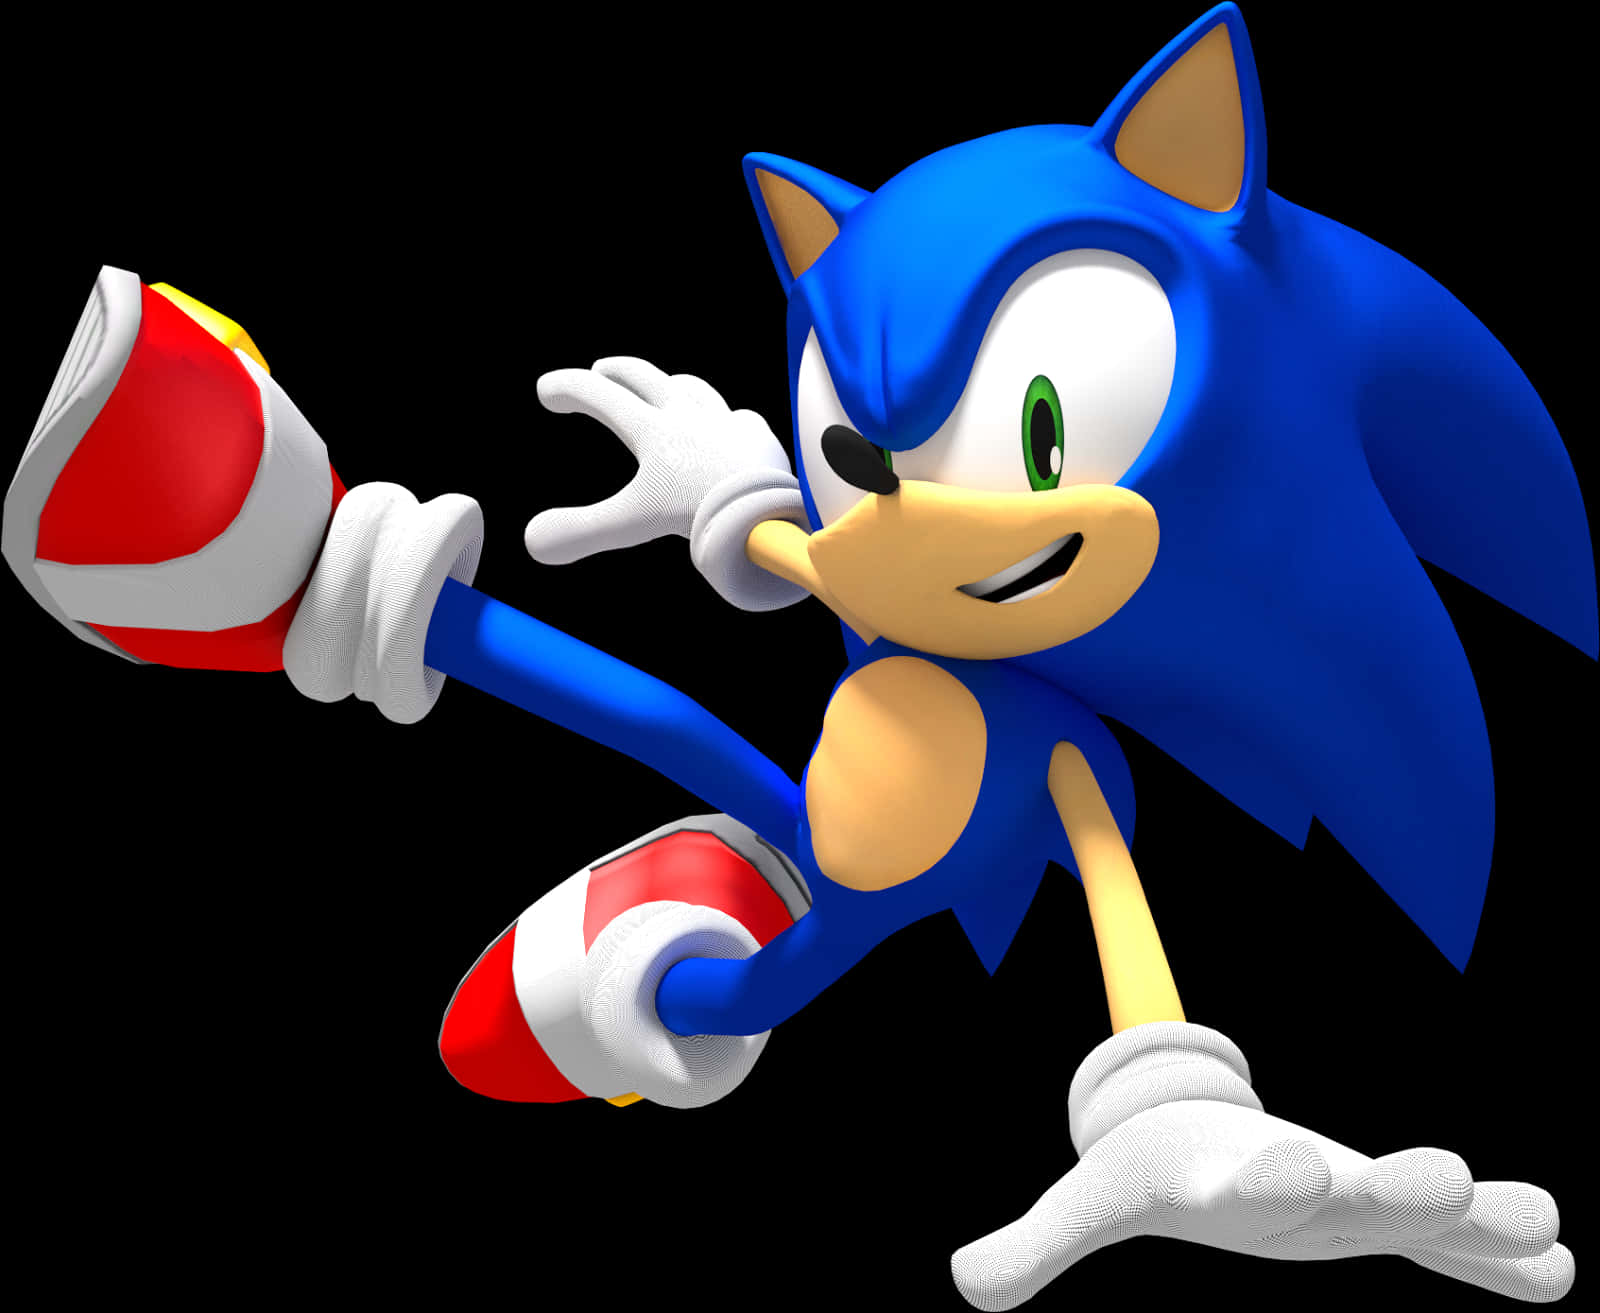 A Cartoon Character Of A Blue Hedgehog